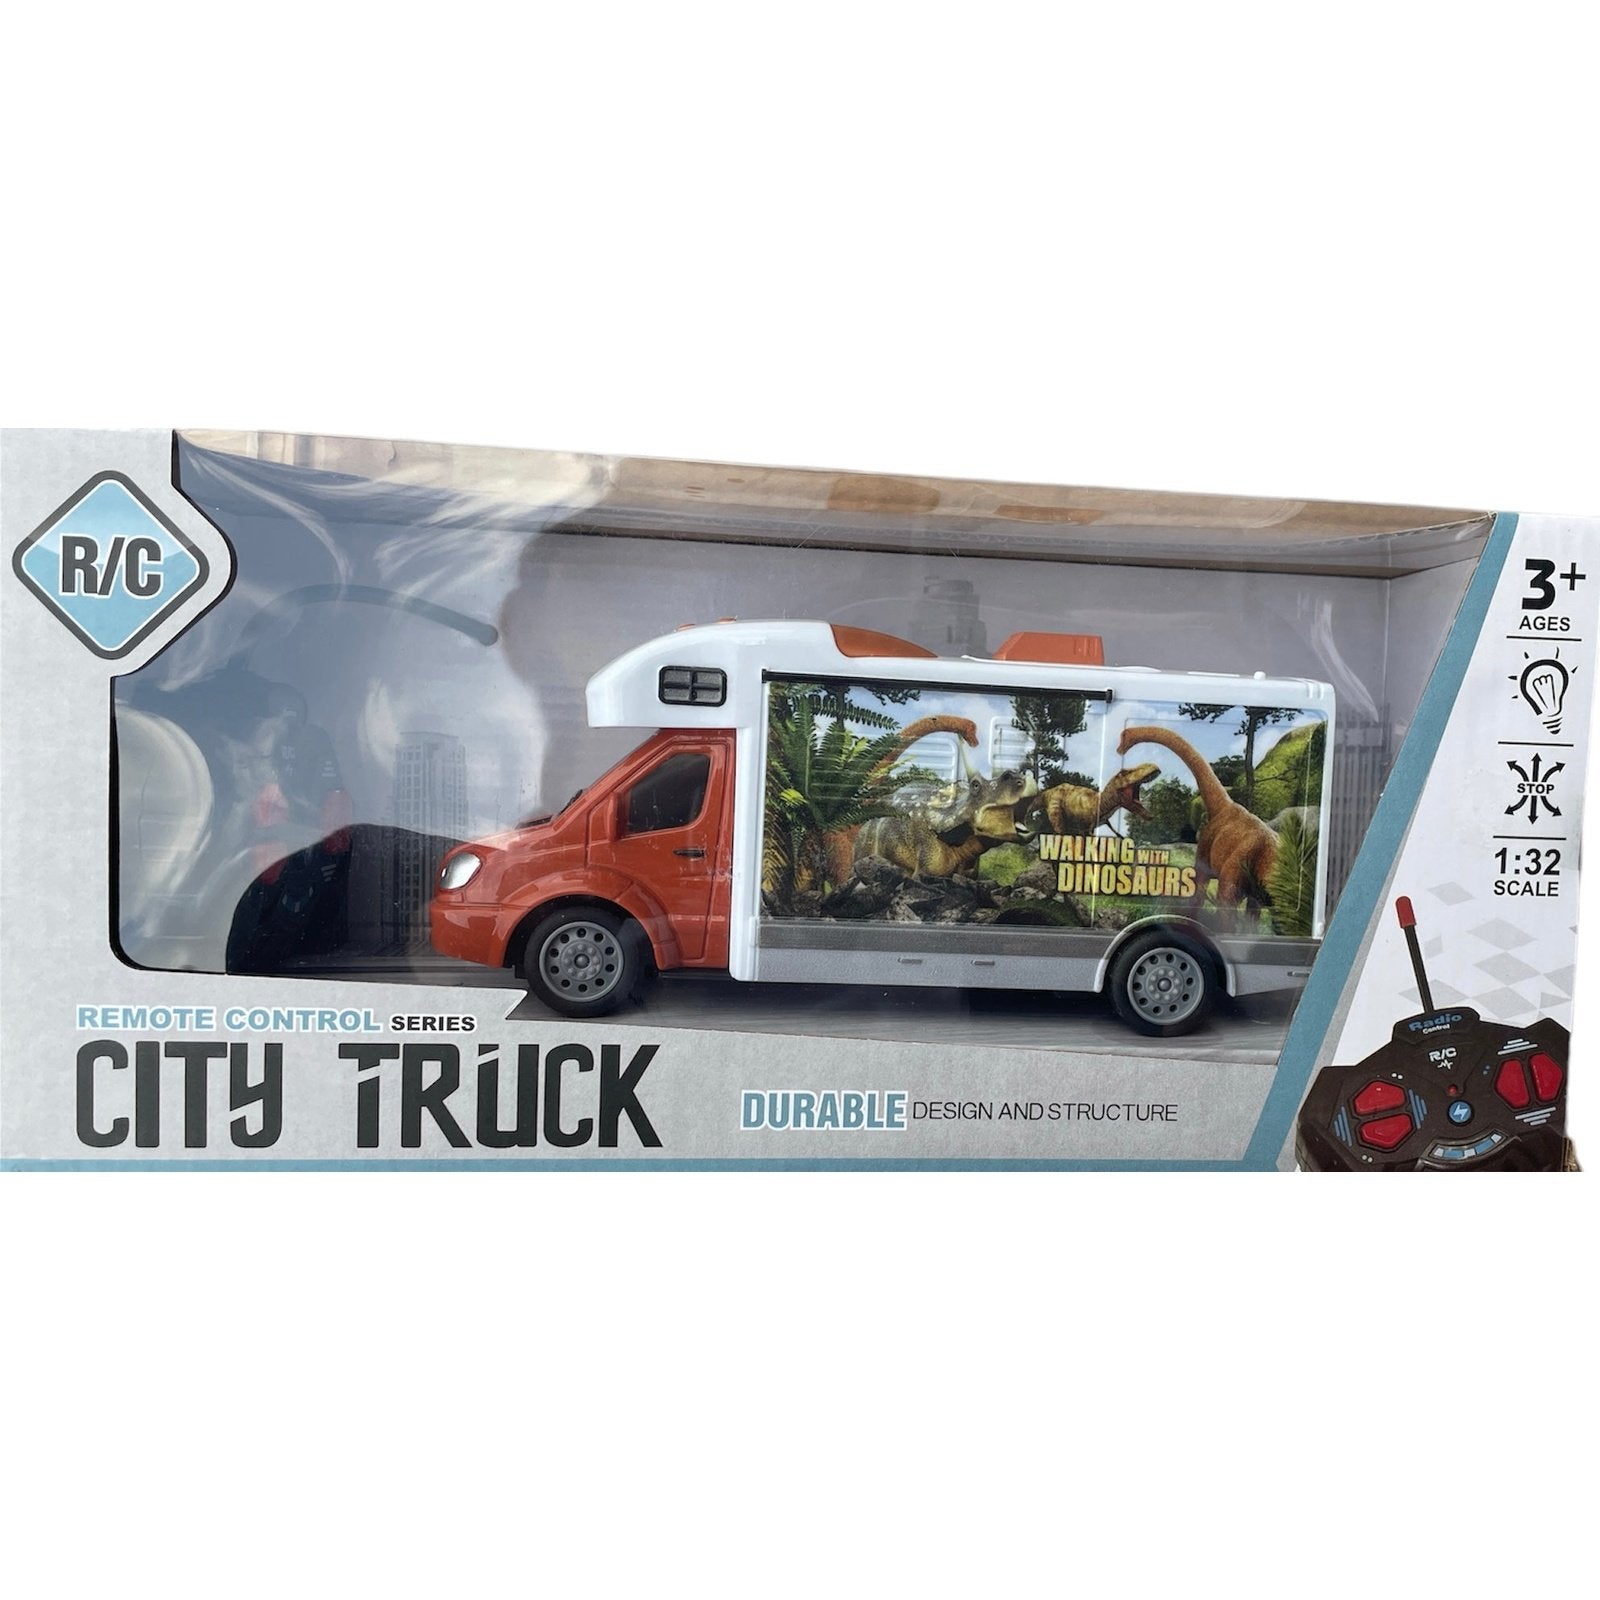 R/C Dinosaurs Truck toy - kidzbuzzz